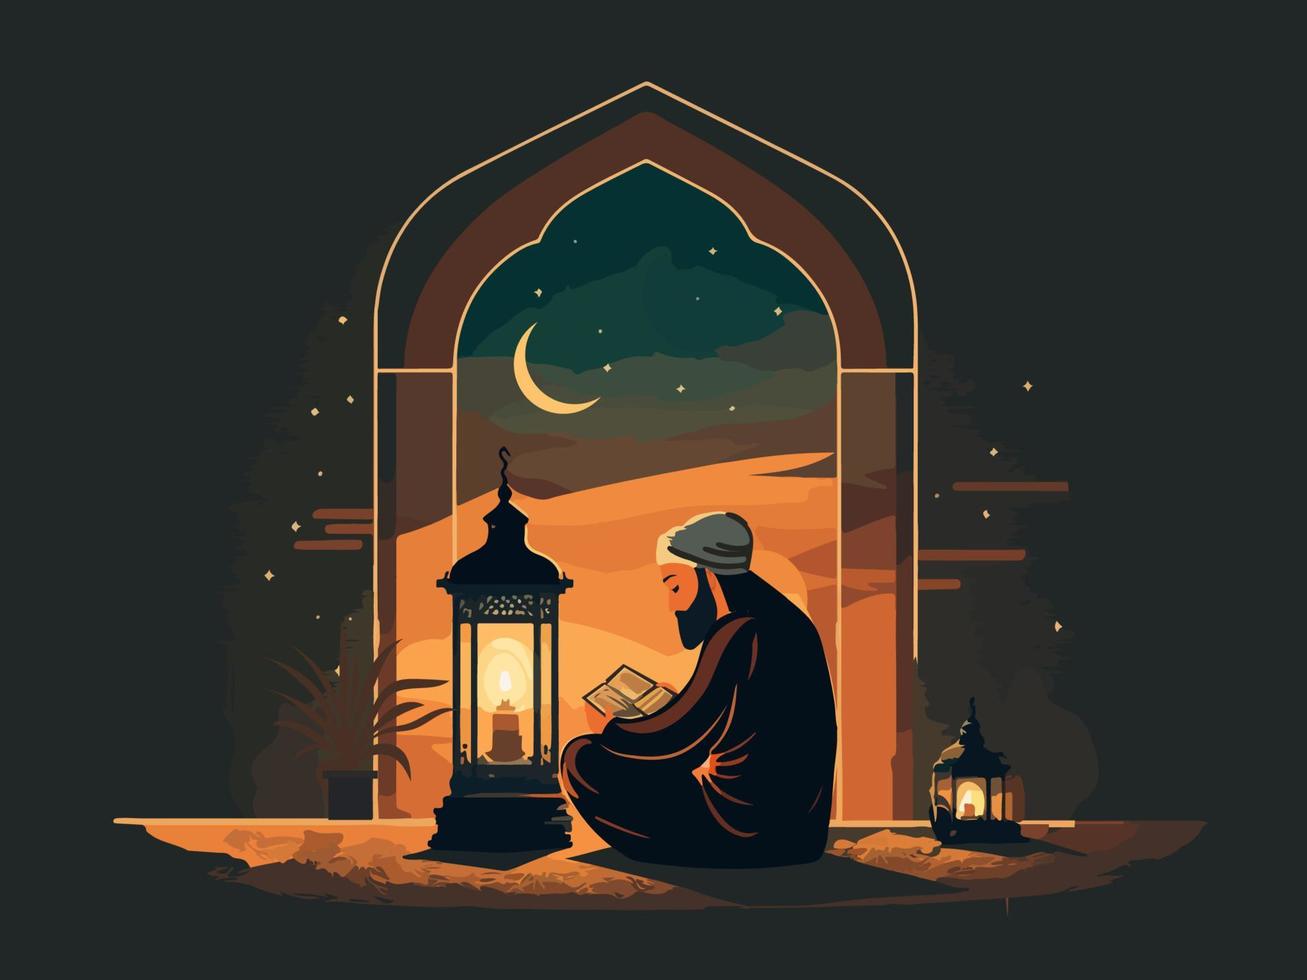 Muslim Man Character Reading Quran With Burning Lantern On Arabic Door In Crescent Moon Night. Islamic Festival Of Eid Or Ramadan Concept. vector